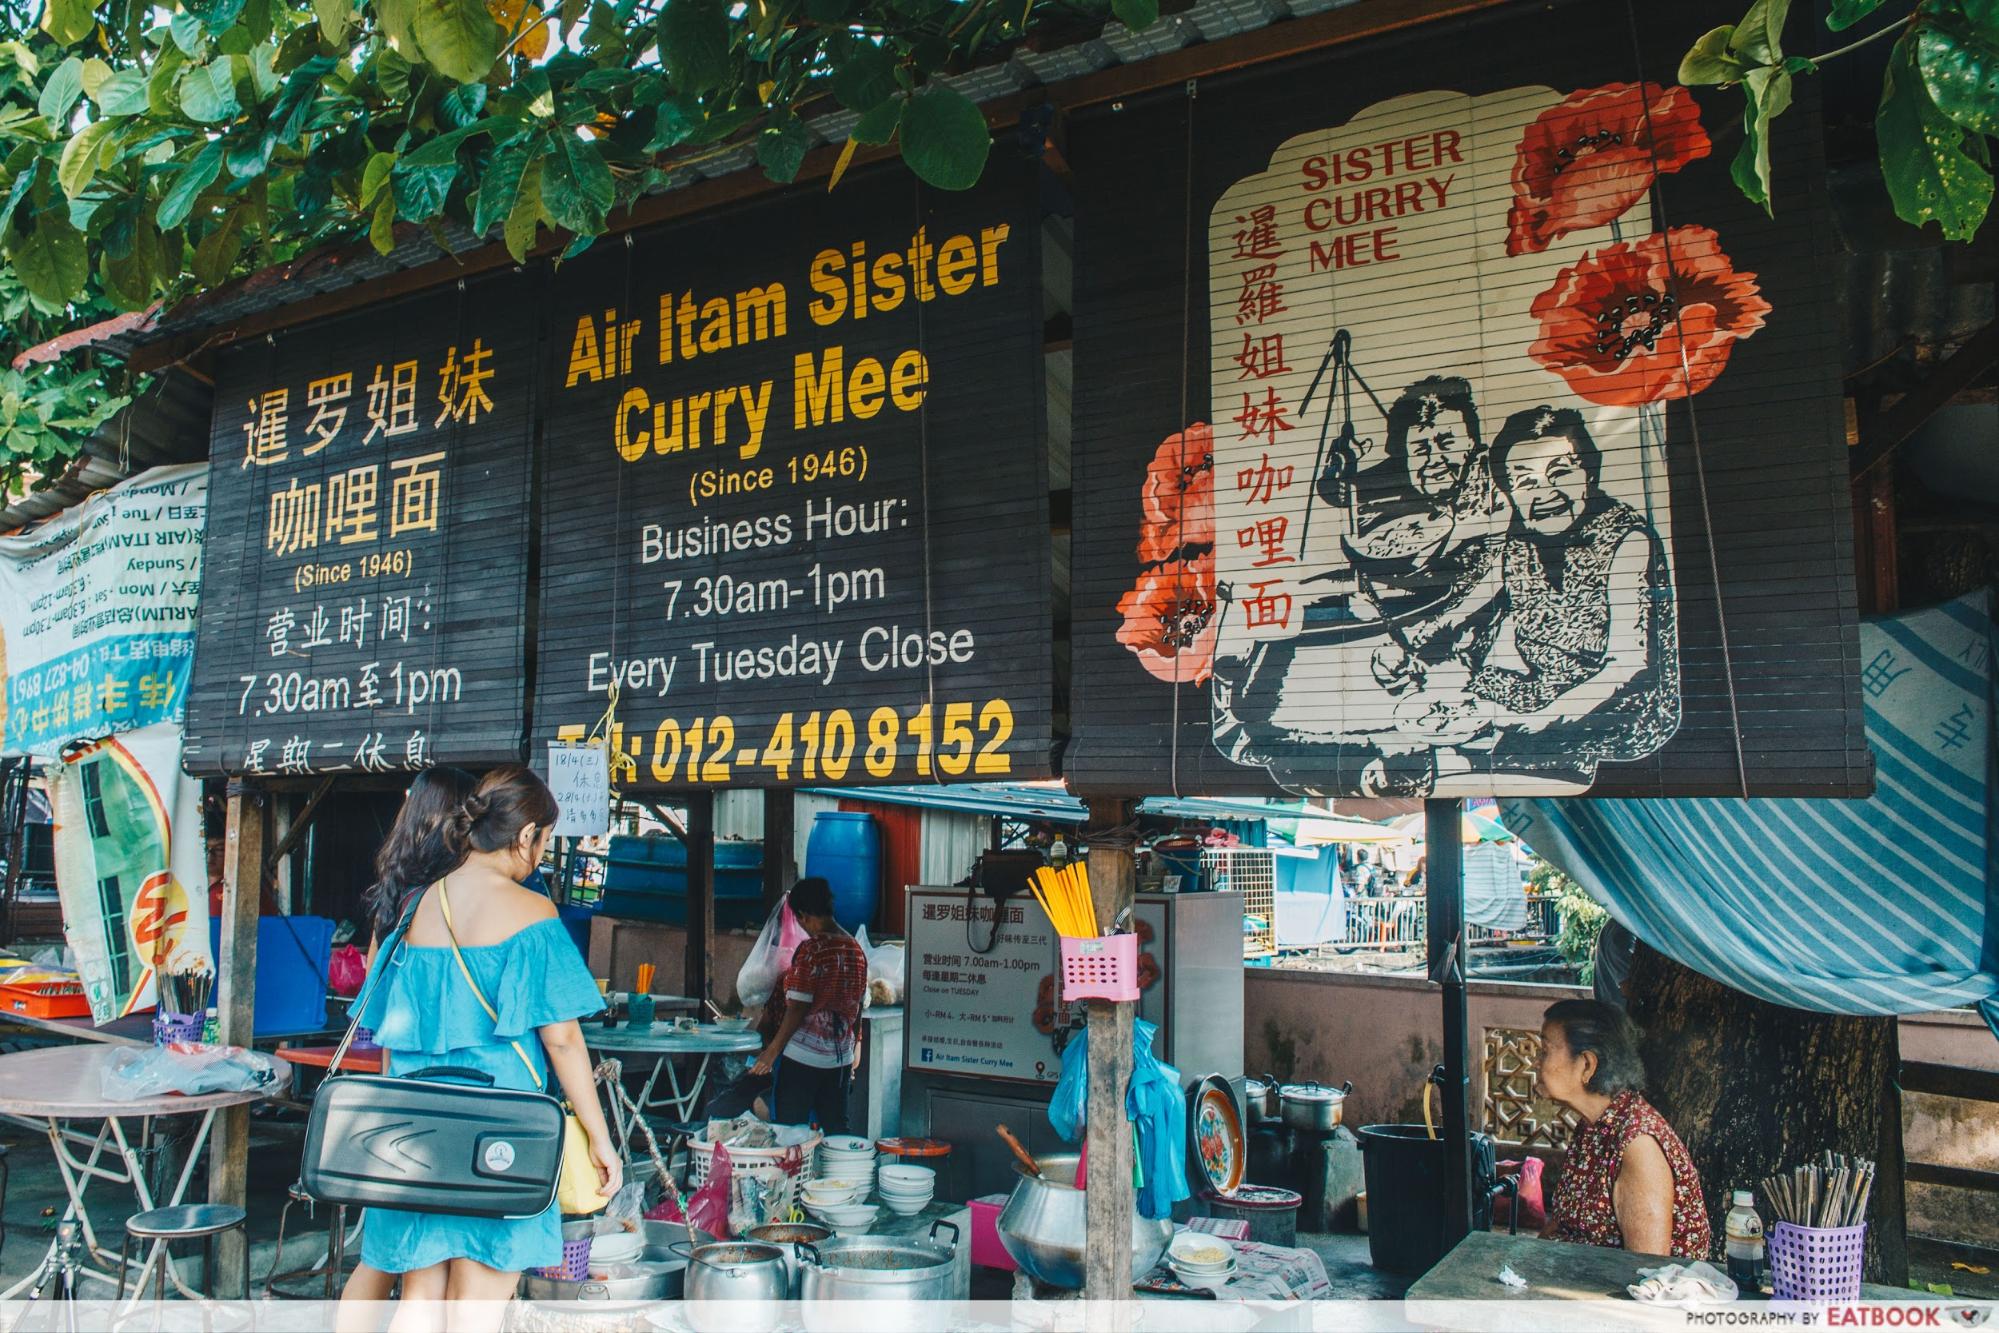 Penang Hawker Food - Air Itam Sister Curry Mee